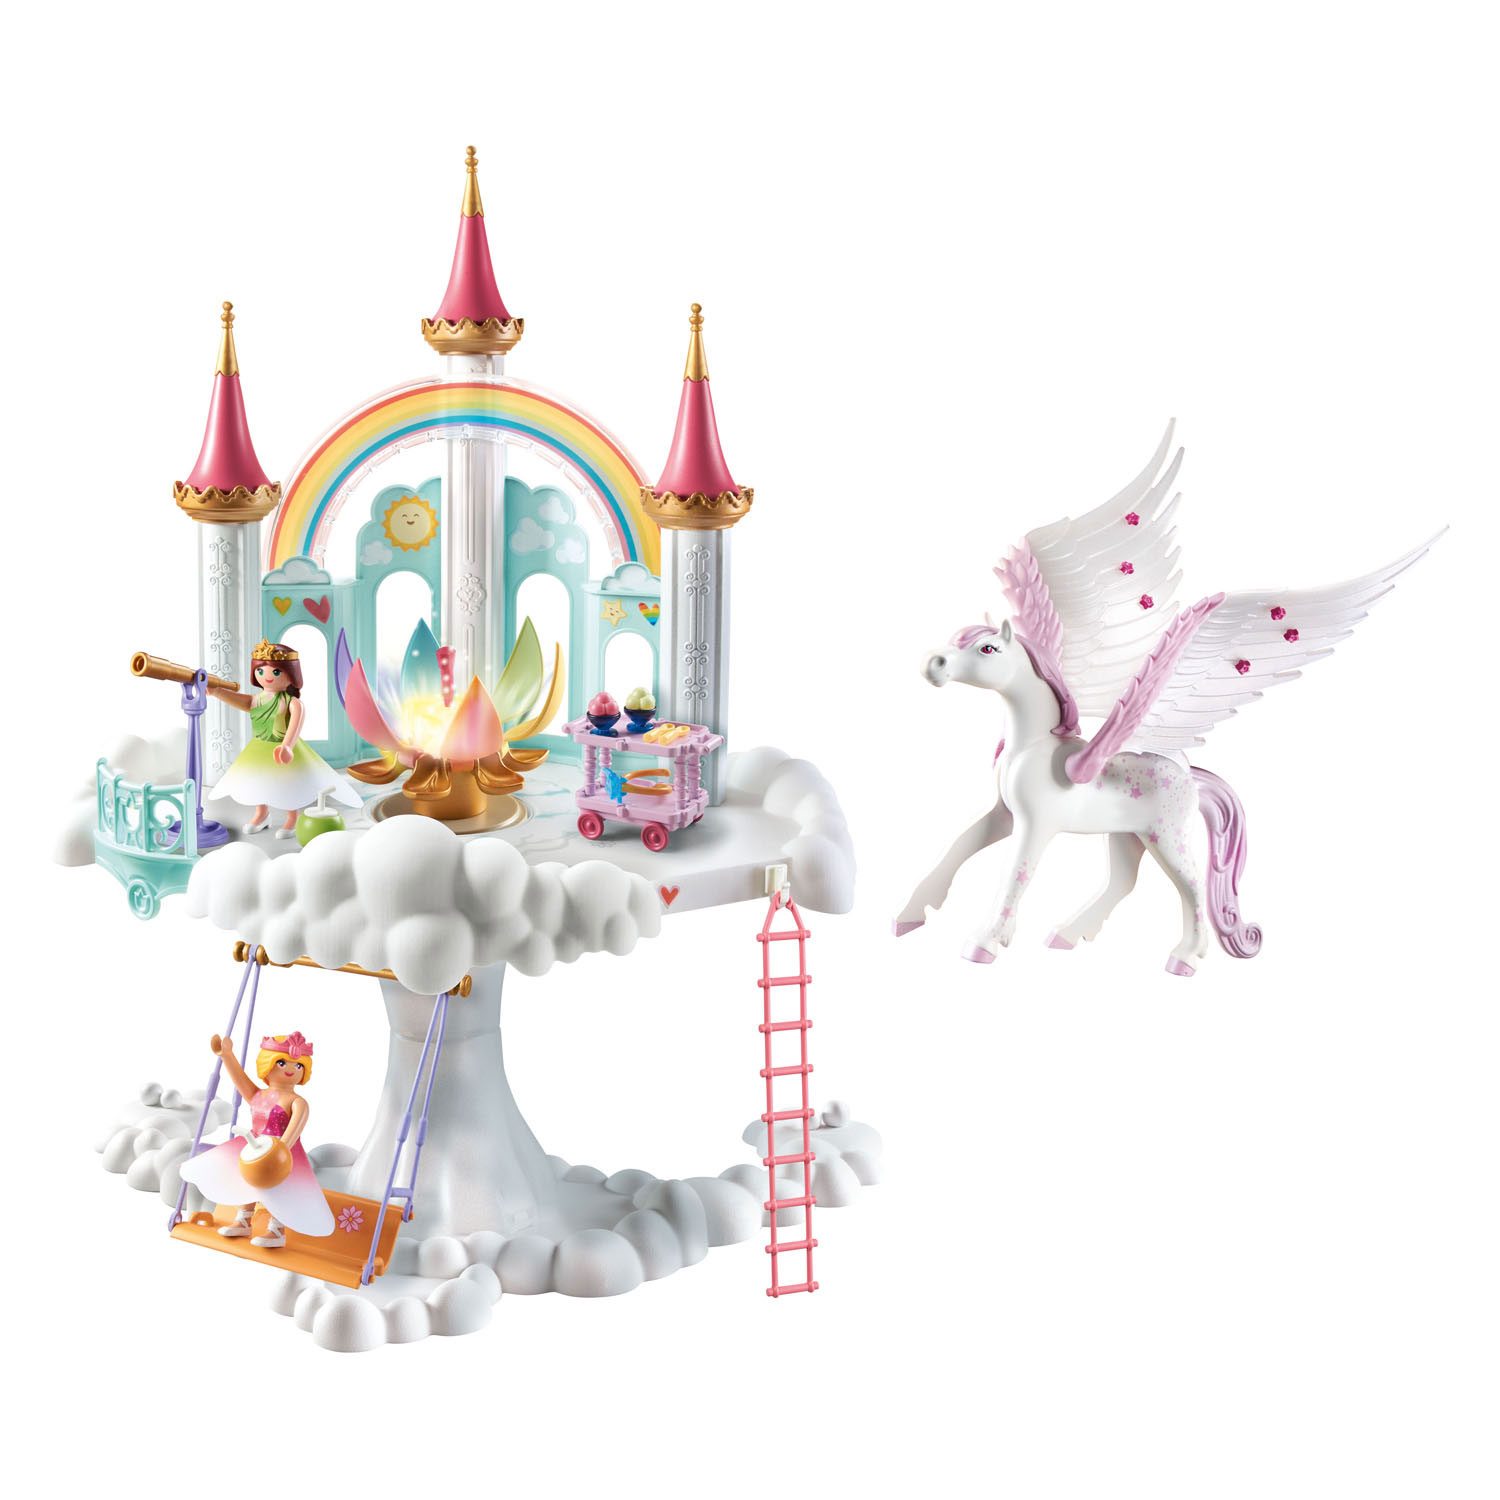  Playmobil Grand Château Princesse avec cheval volant